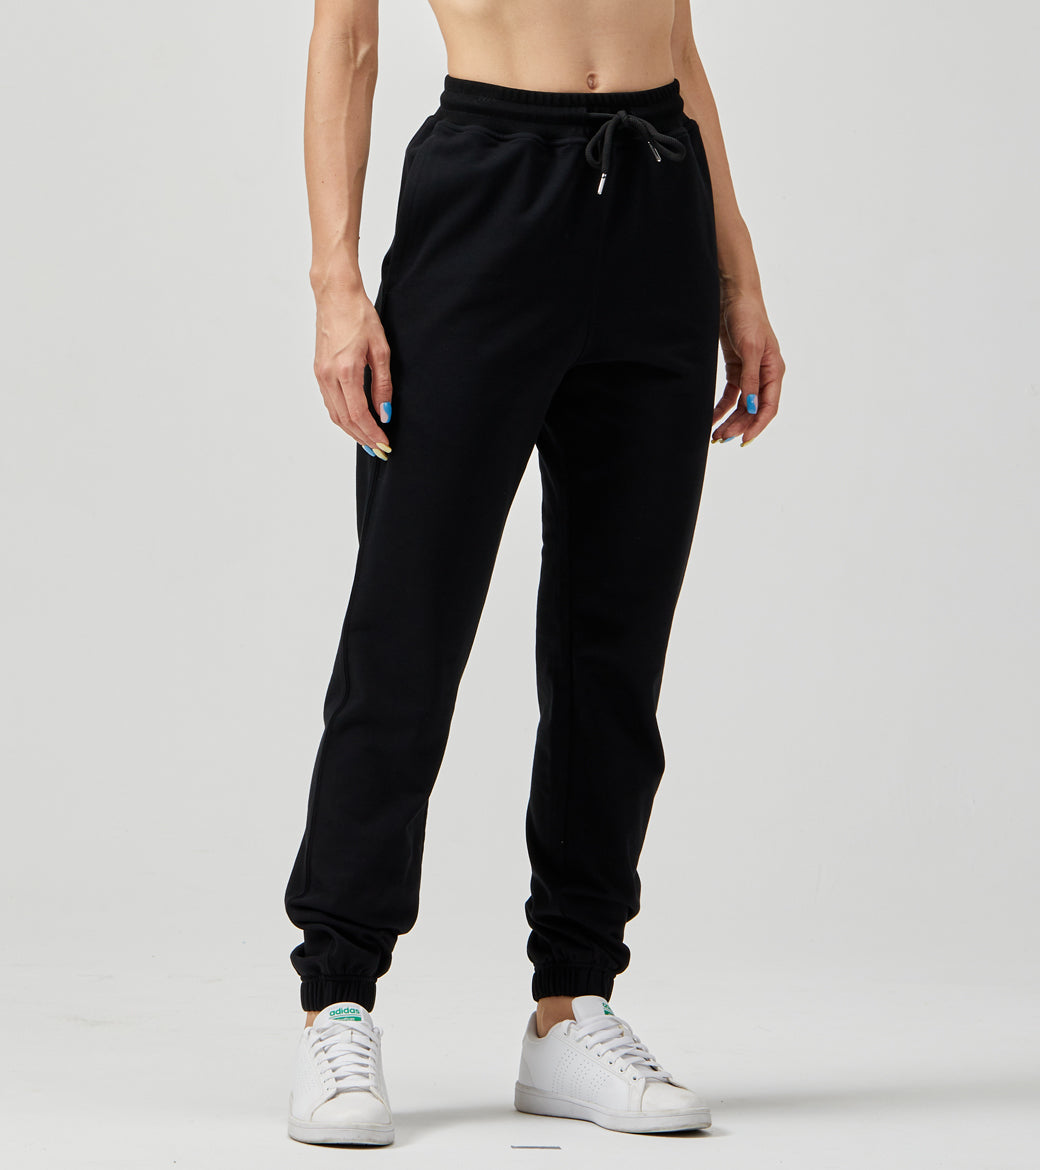 LOVESOFT Women's Cotton Sweatpants Baggy Jogging High Waist Belt Pockets